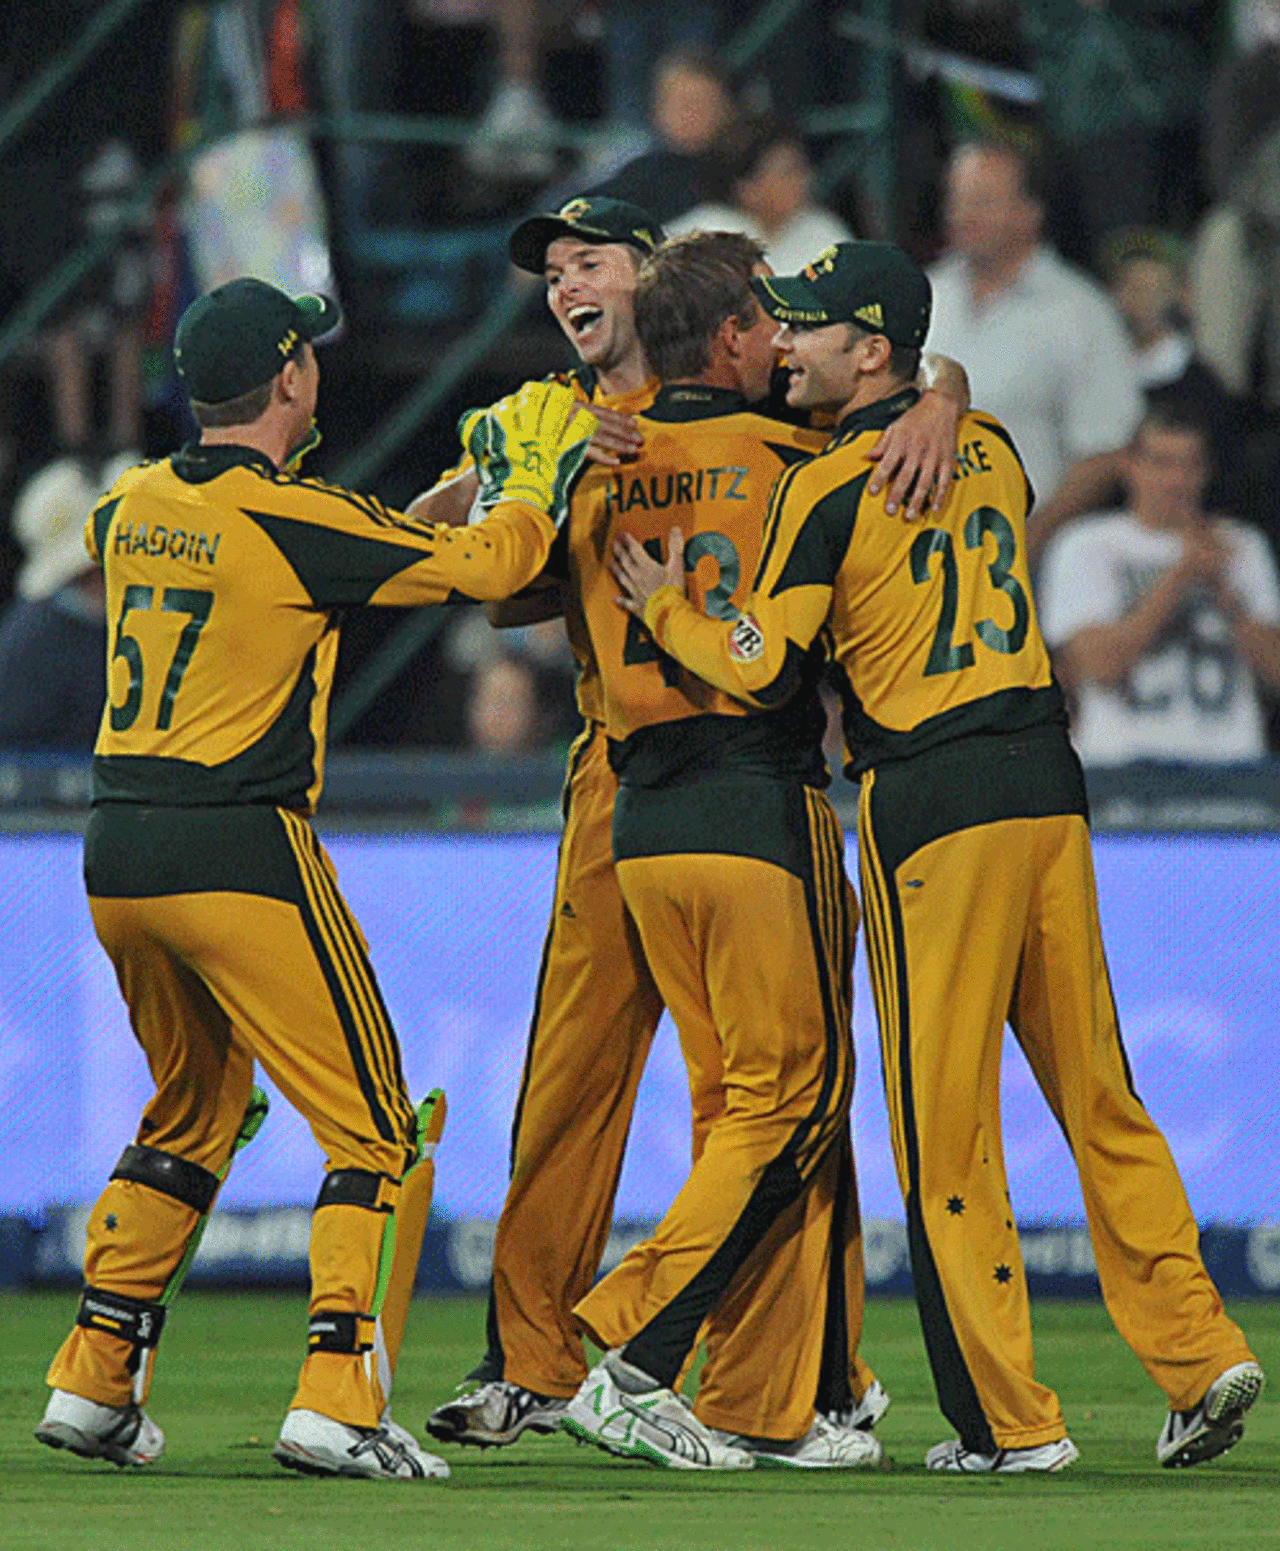 Ben Laughlin is mobbed after taking a stunning catch to dismiss Albie Morkel, South Africa v Australia, 5th ODI, Johannesburg, April 17, 2009